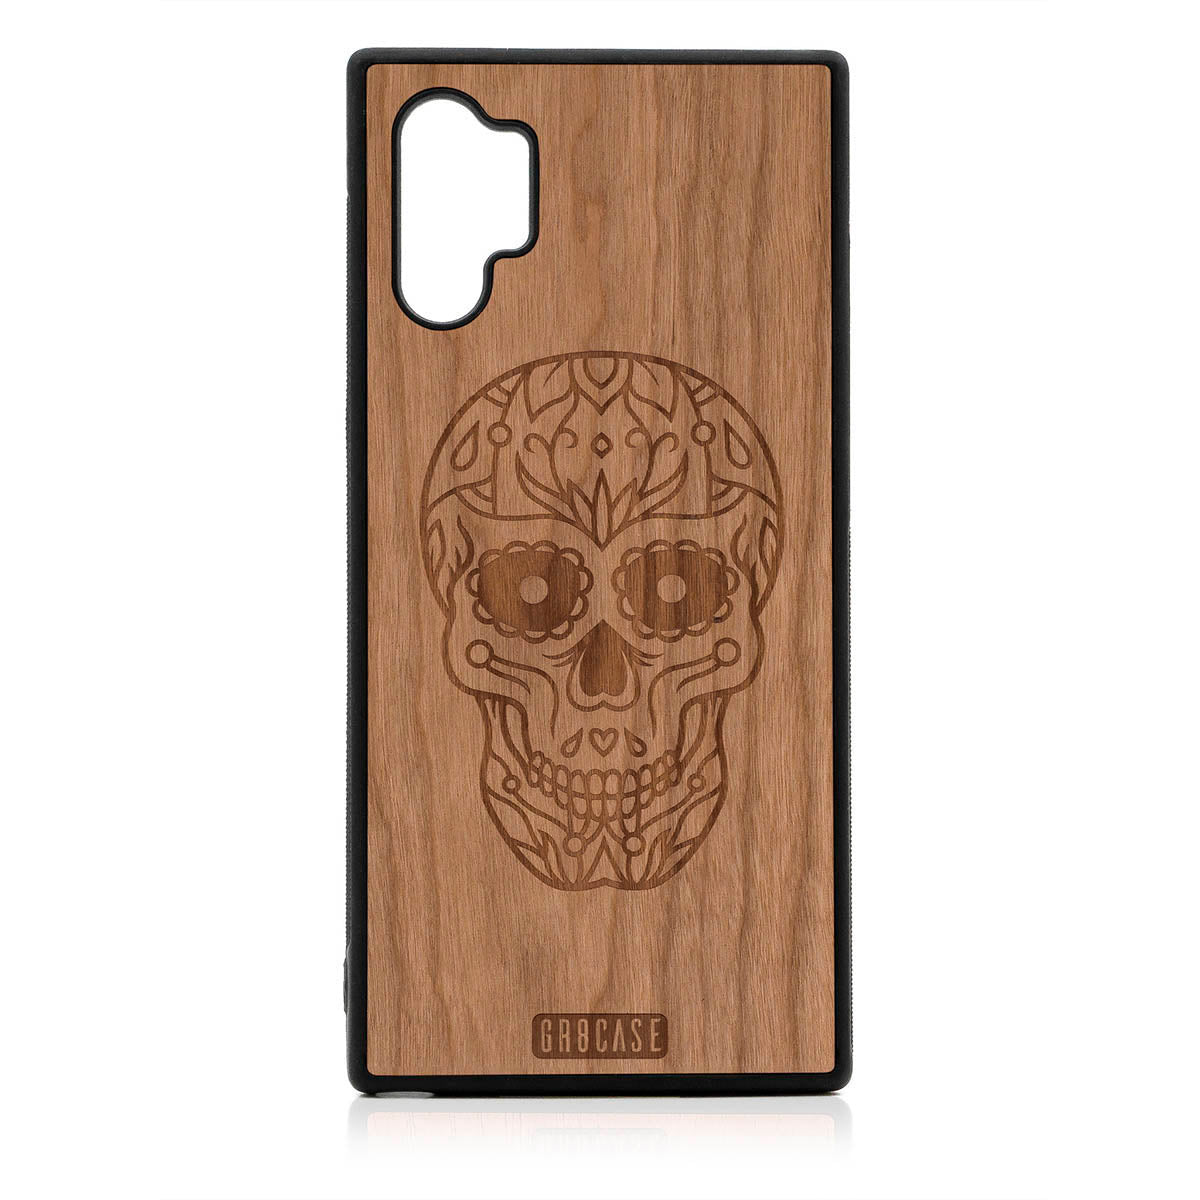 Sugar Skull Design Wood Case For Samsung Galaxy Note 10 Plus by GR8CASE